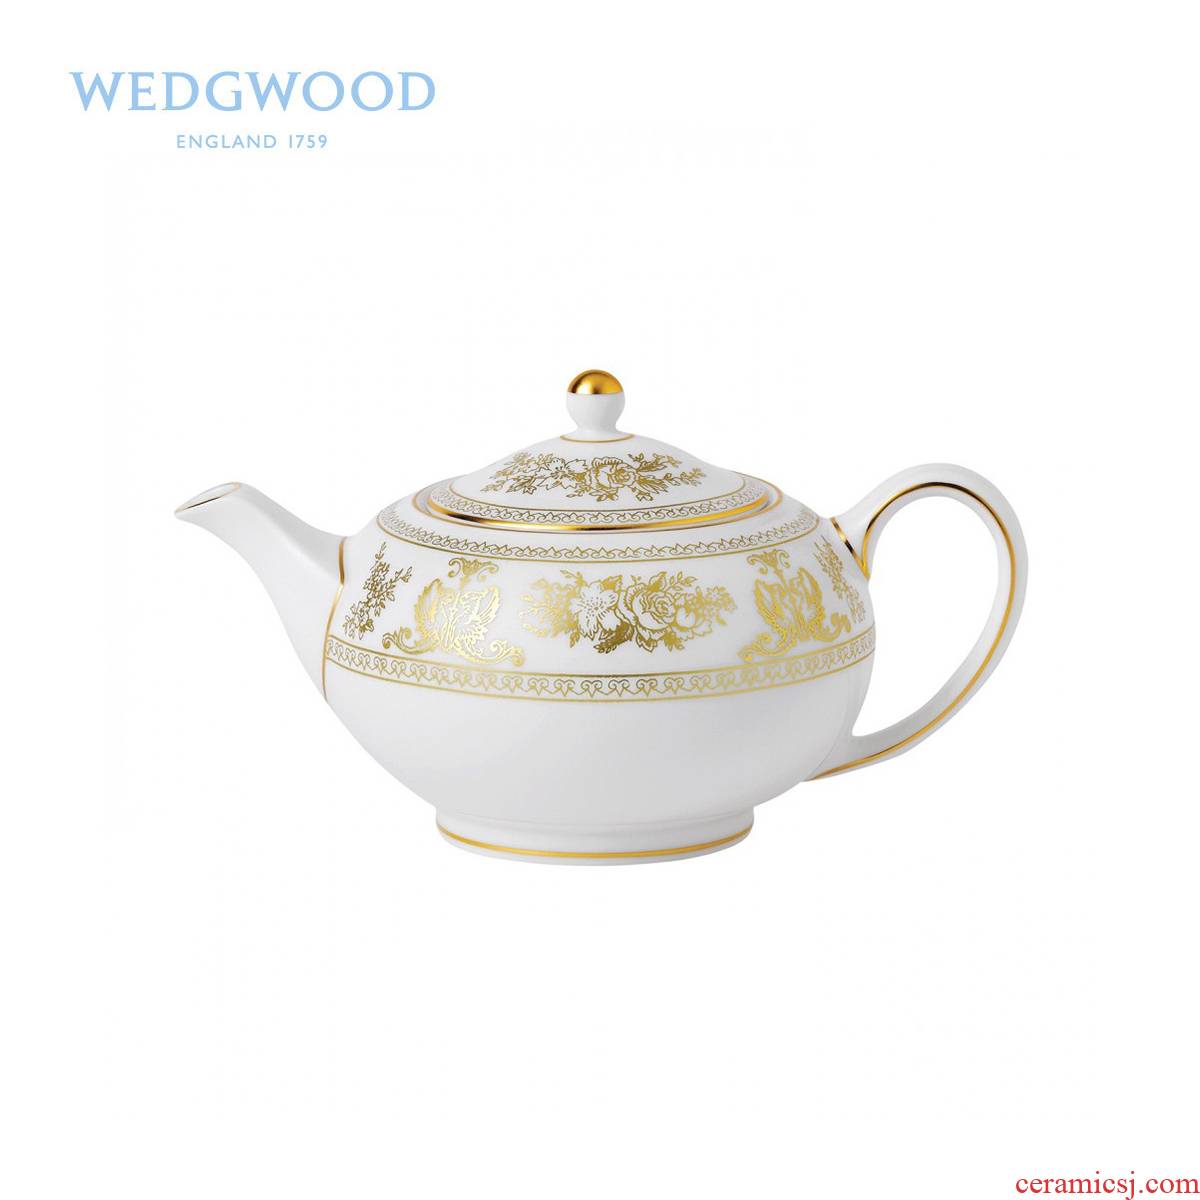 Wedgwood waterford Wedgwood Gold Columbia Columbia Gold drill ipads China 600 ml tea/coffee maker